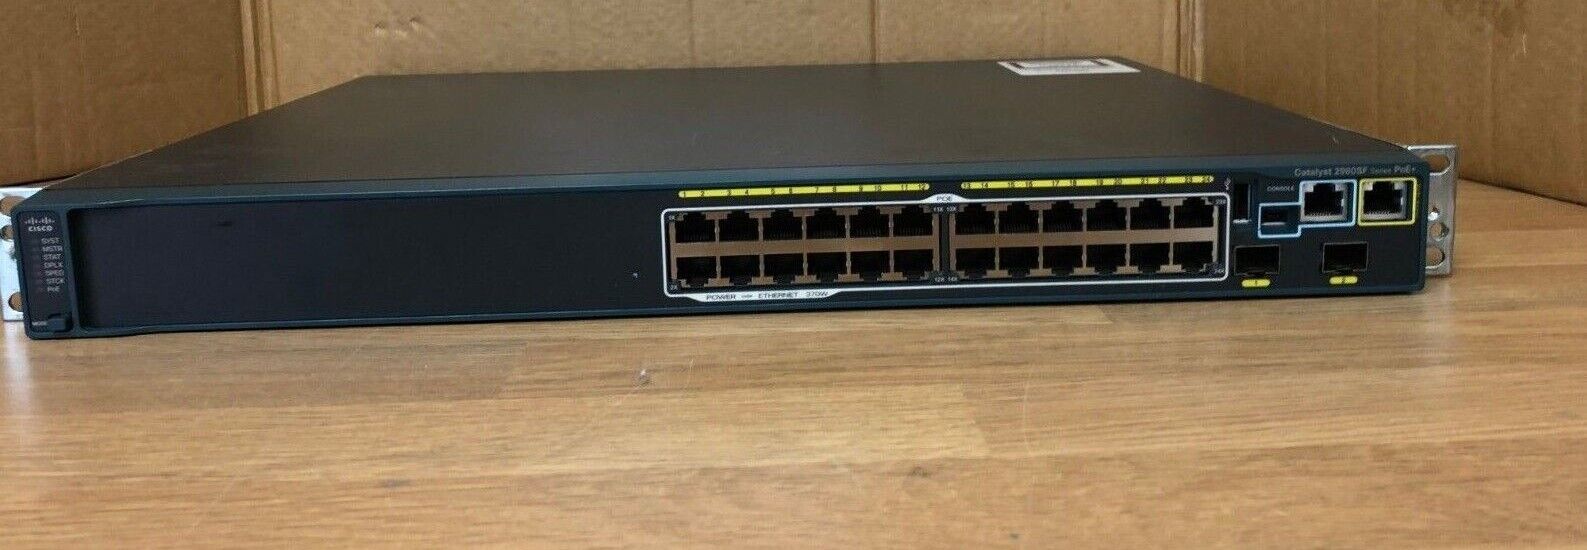 Cisco 2960S WS-C2960S-F24PS-L 24Port Gigabit PoE+ Ethernet Switch PoE 15.2 OS